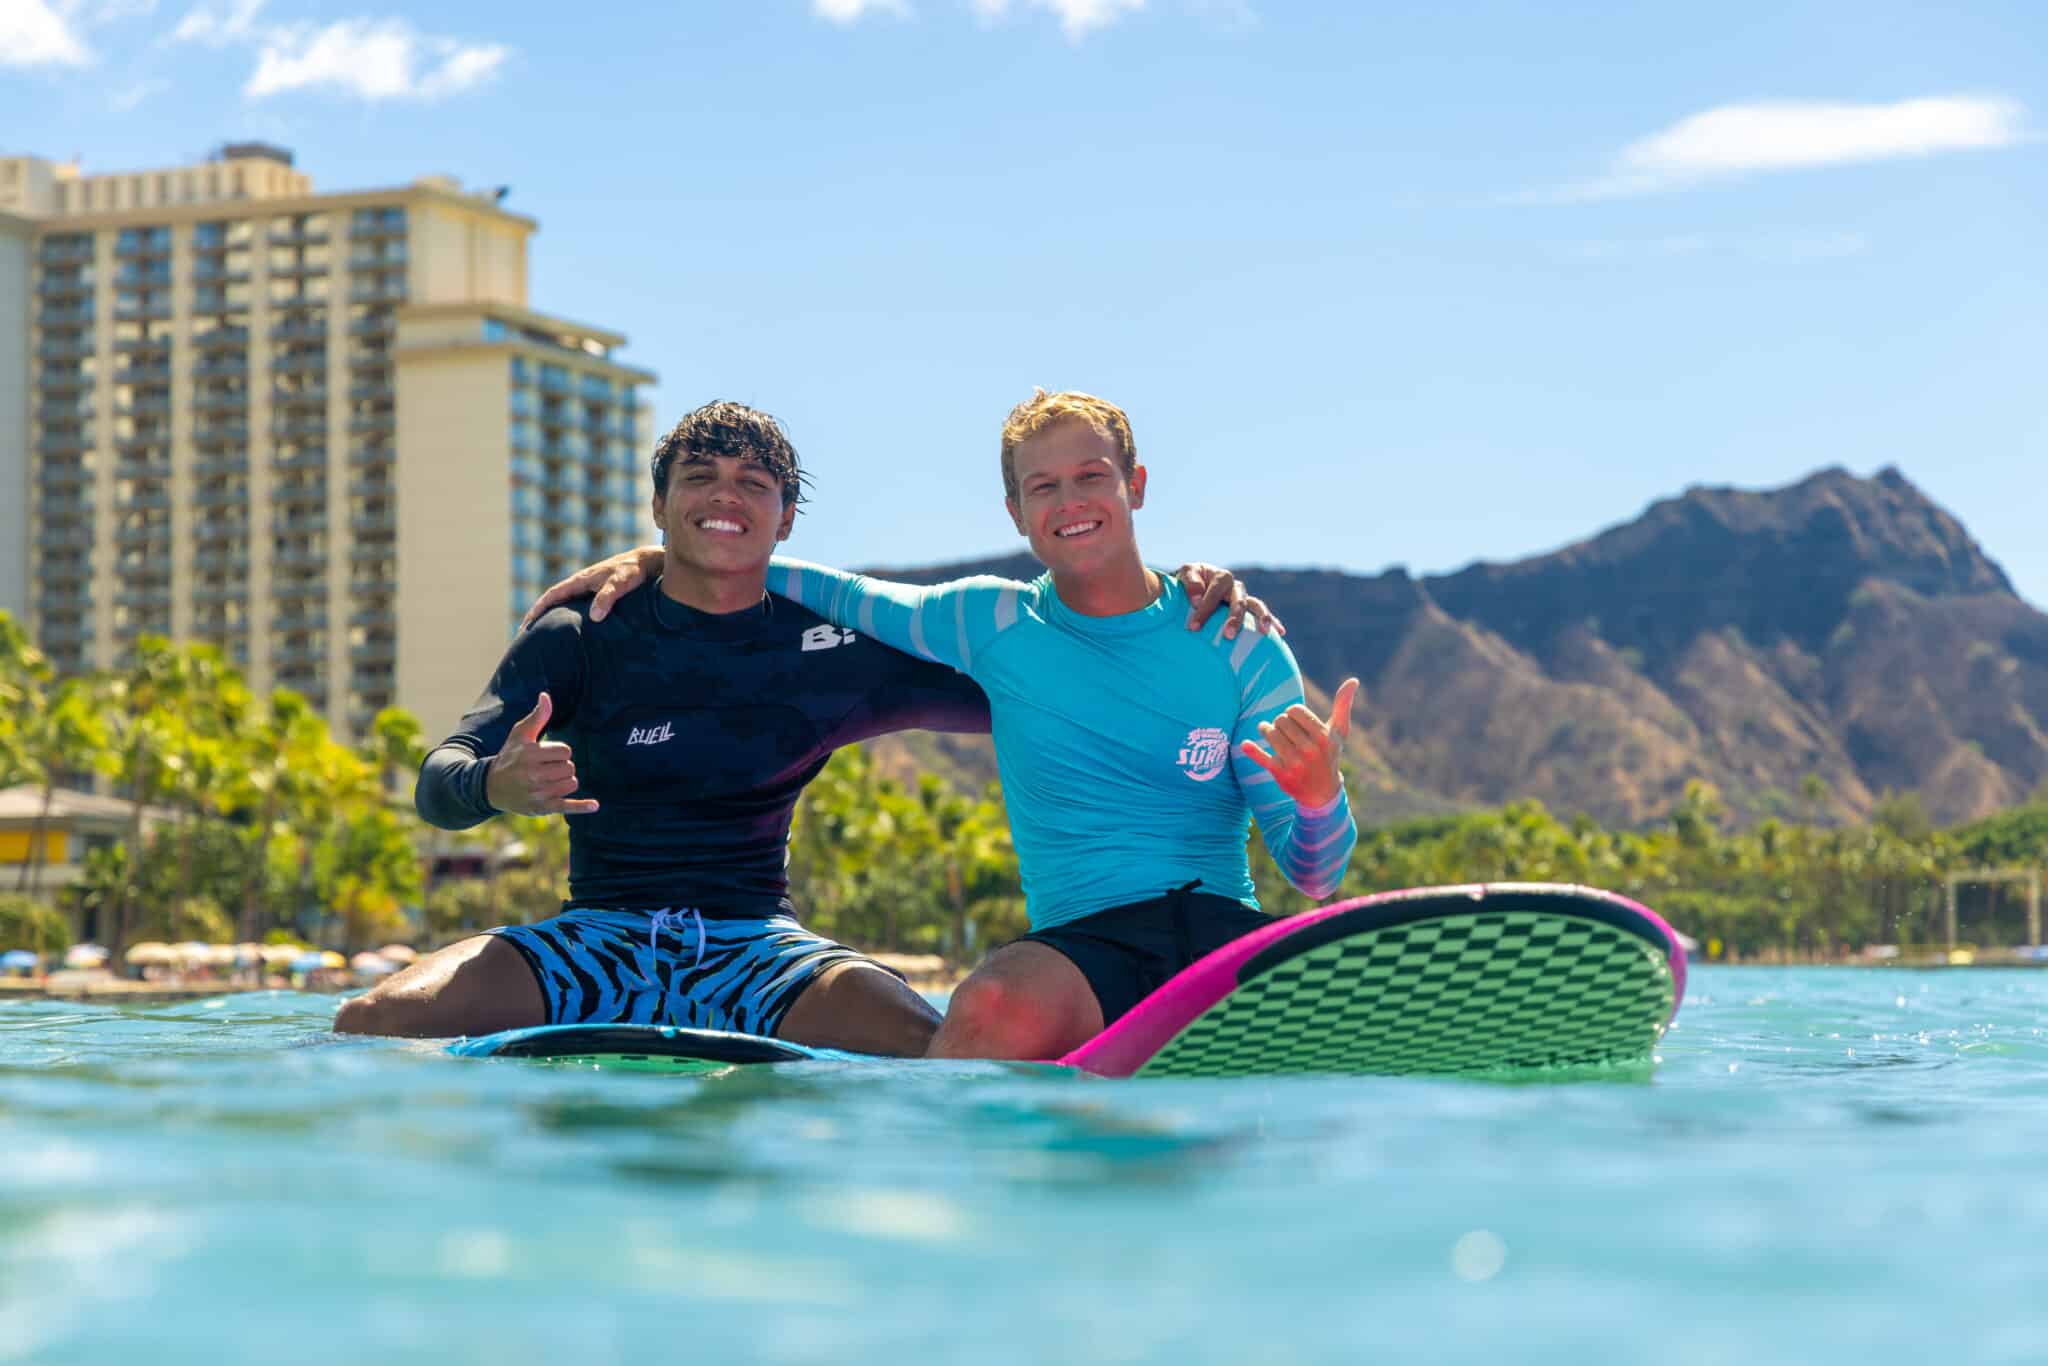 Jamie O'Brien Surf Experience in Waikiki.